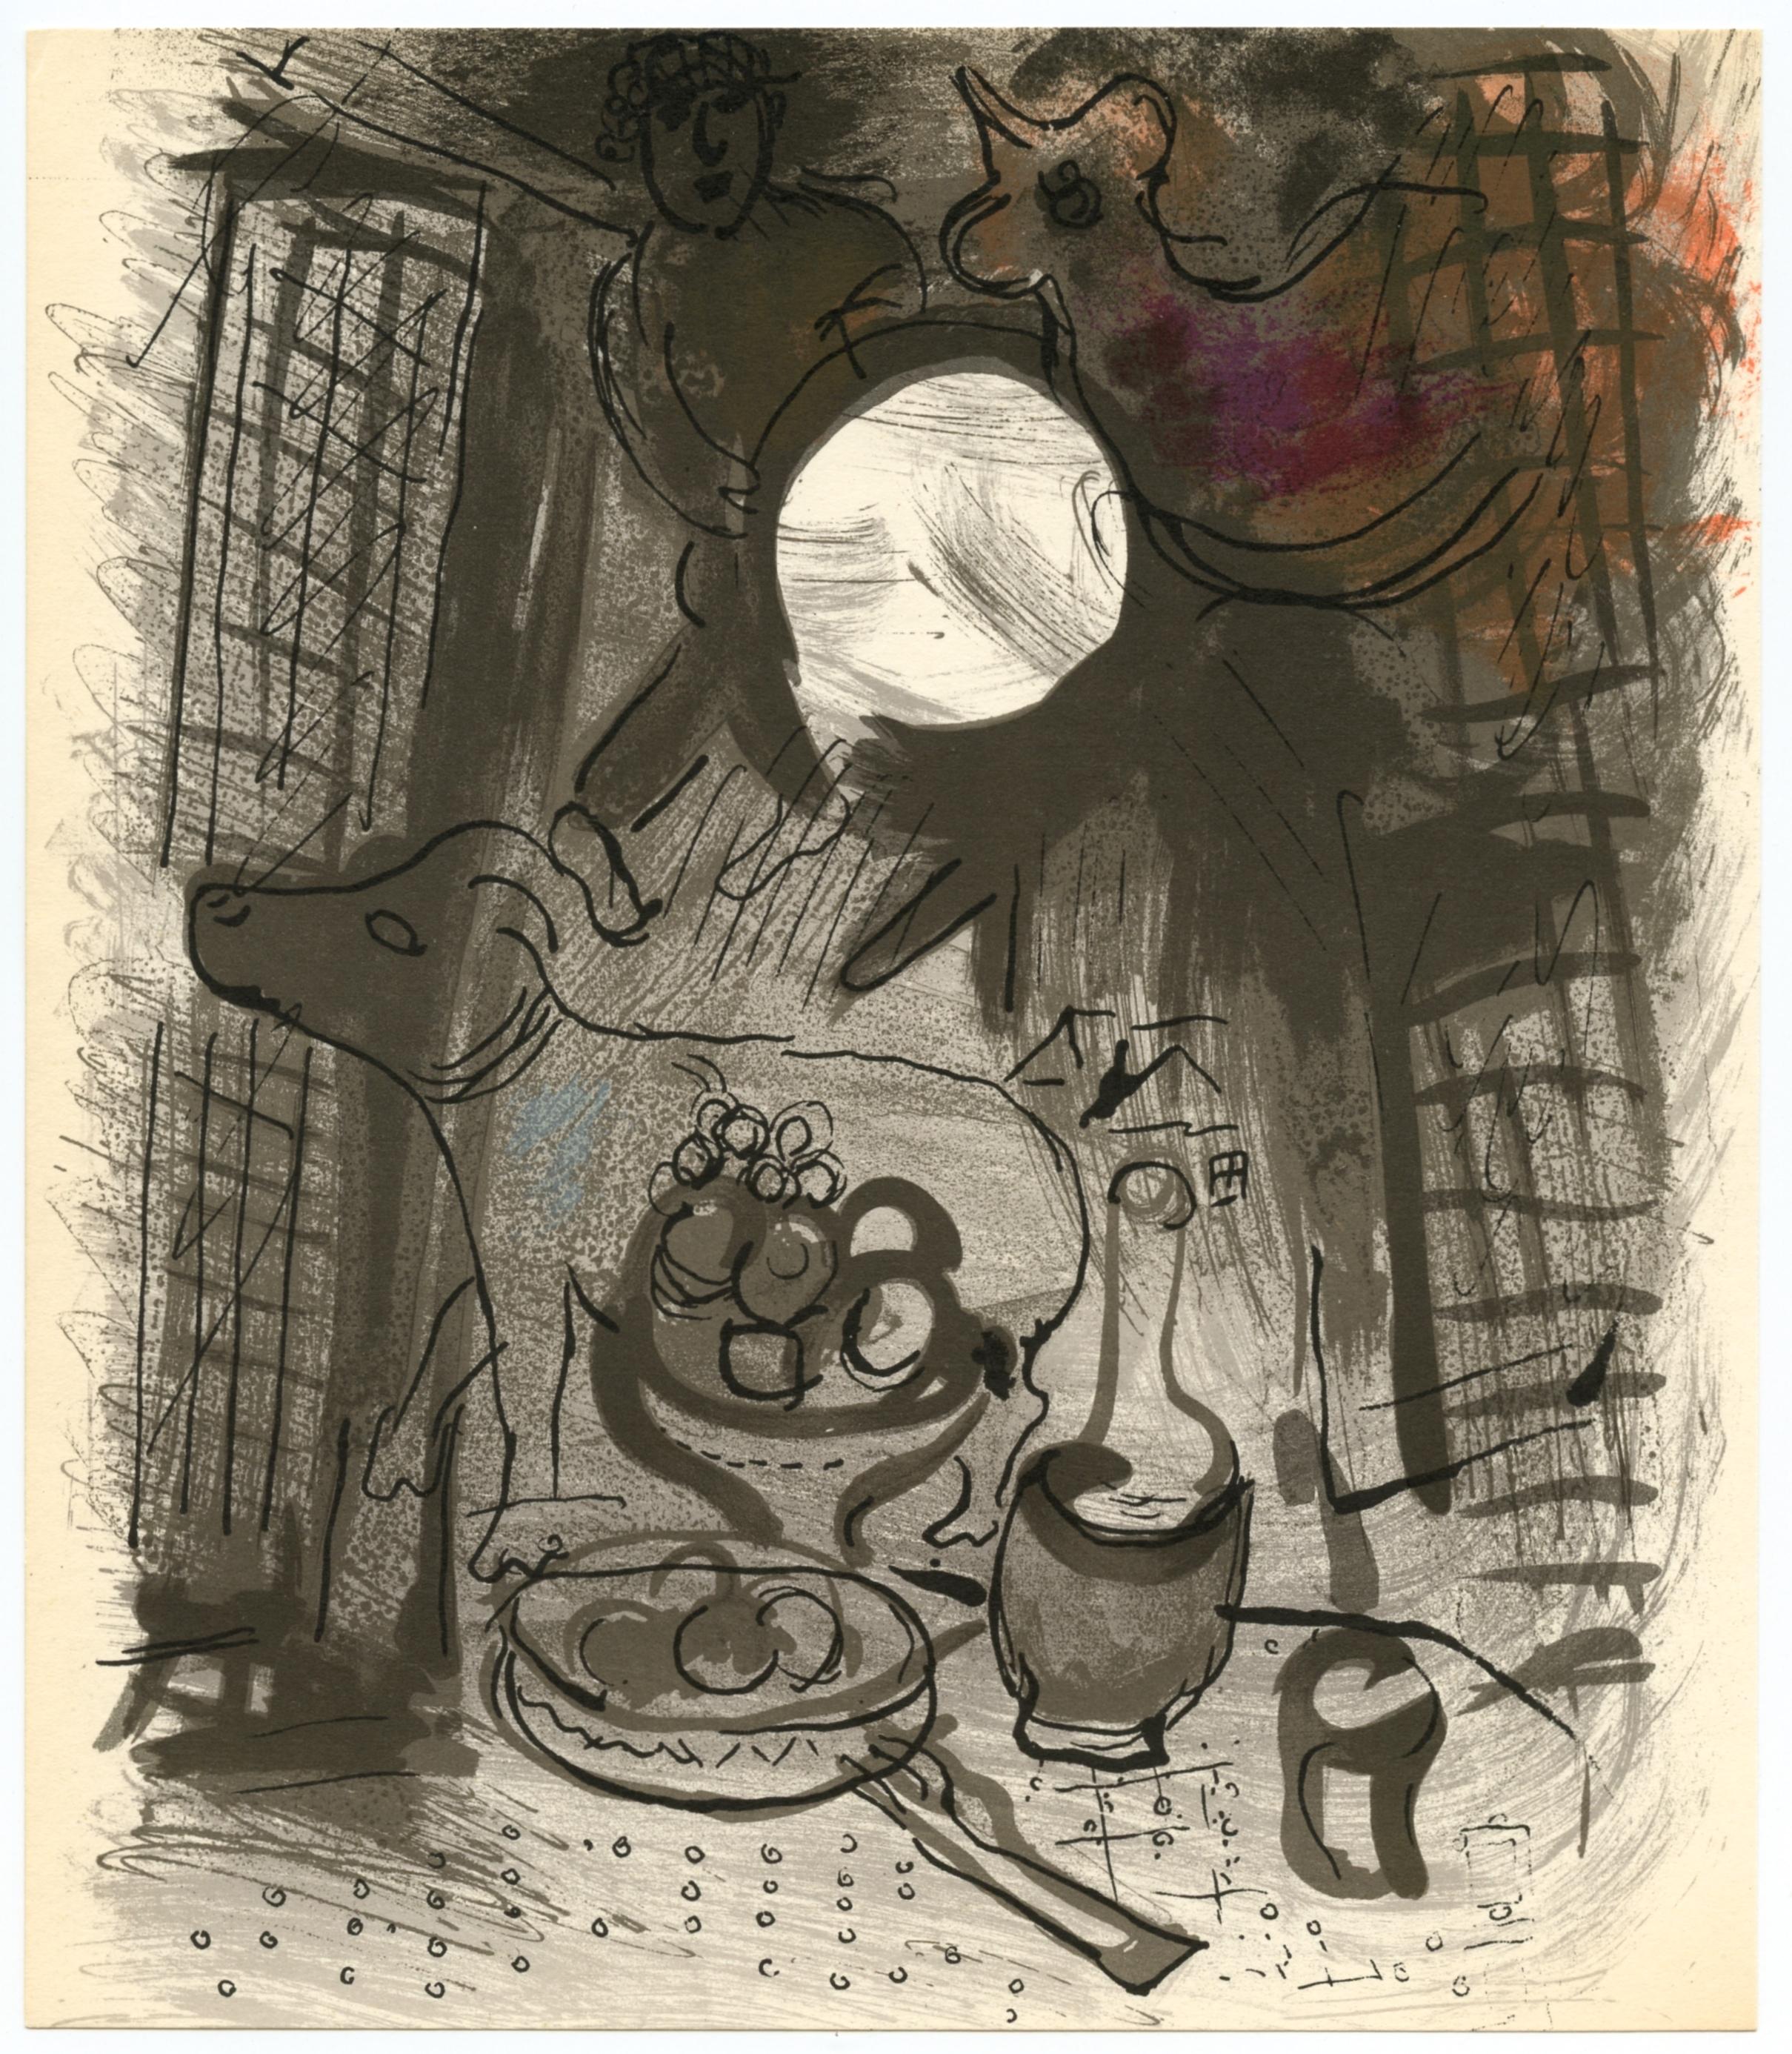 Marc Chagall Portrait Print - "Nature morte brune" original lithograph